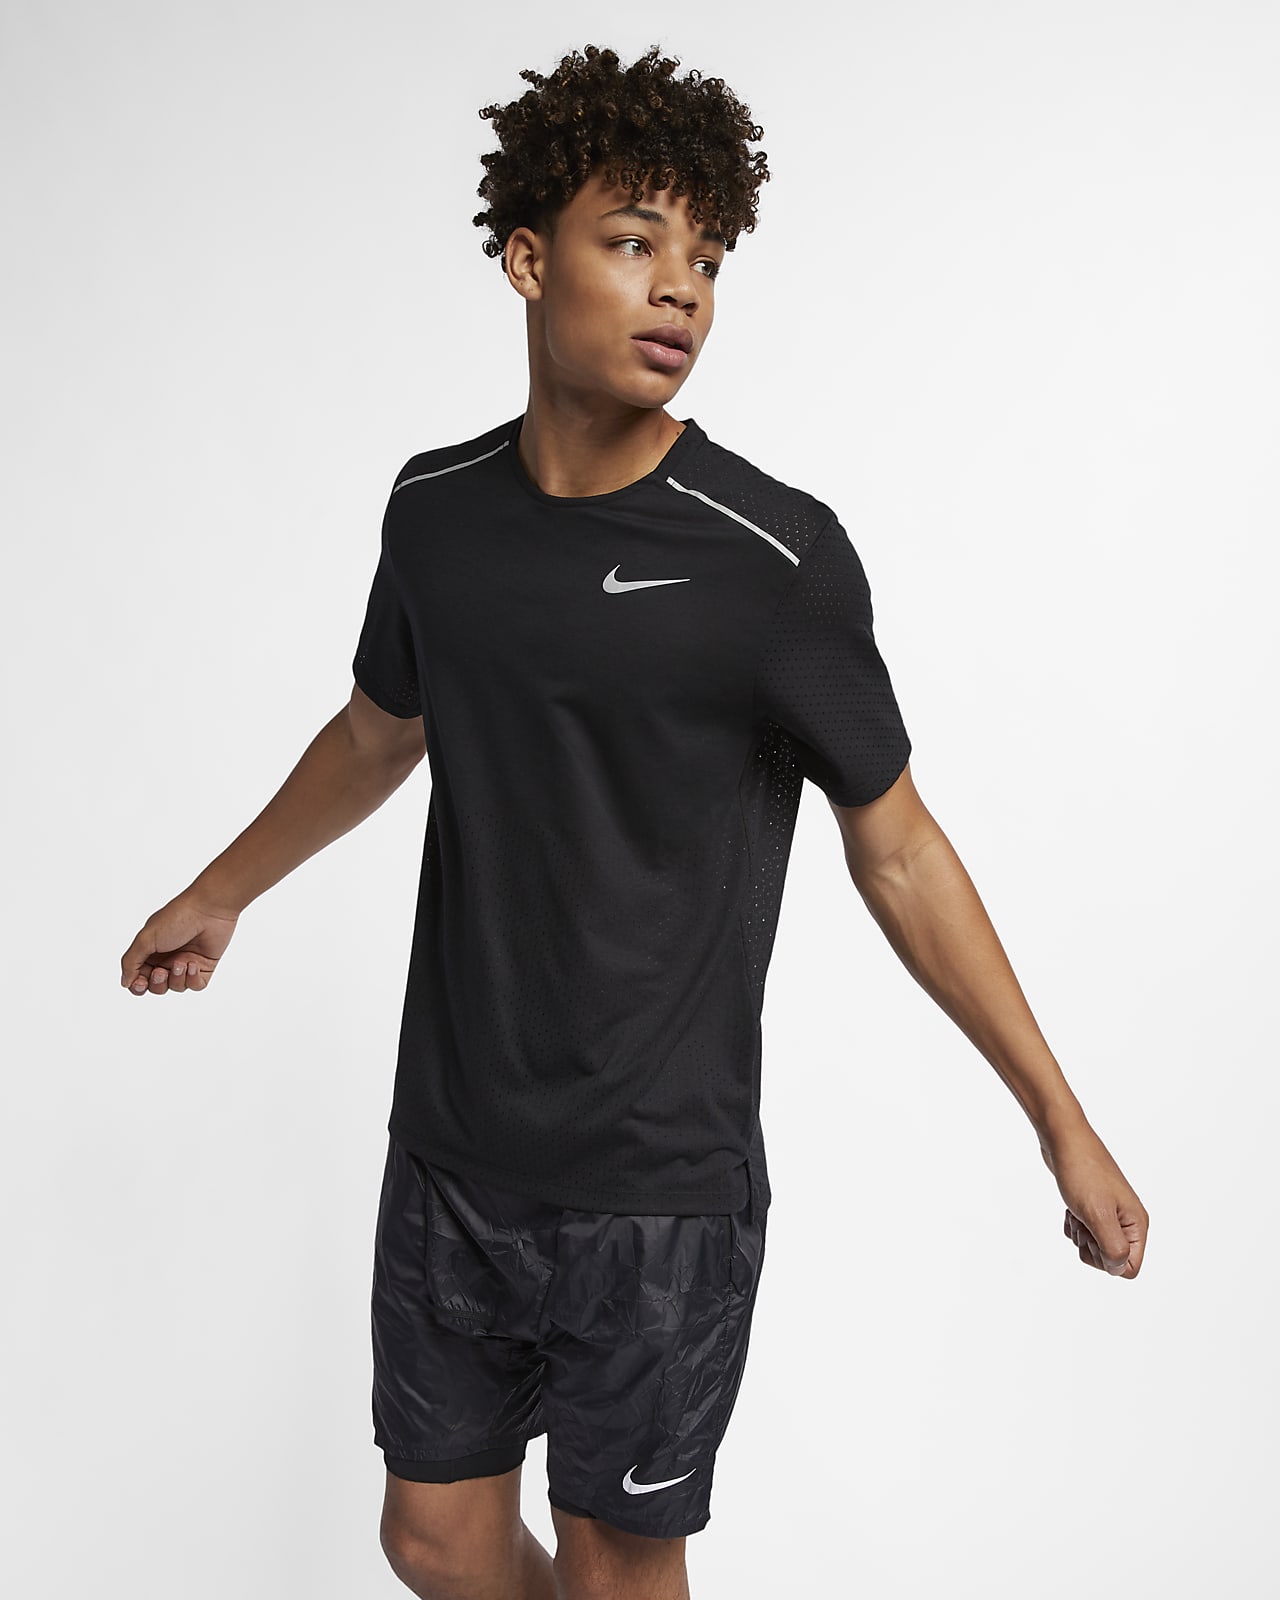 Nike Rise 365 Men's Short-Sleeve Running Top. Nike LU